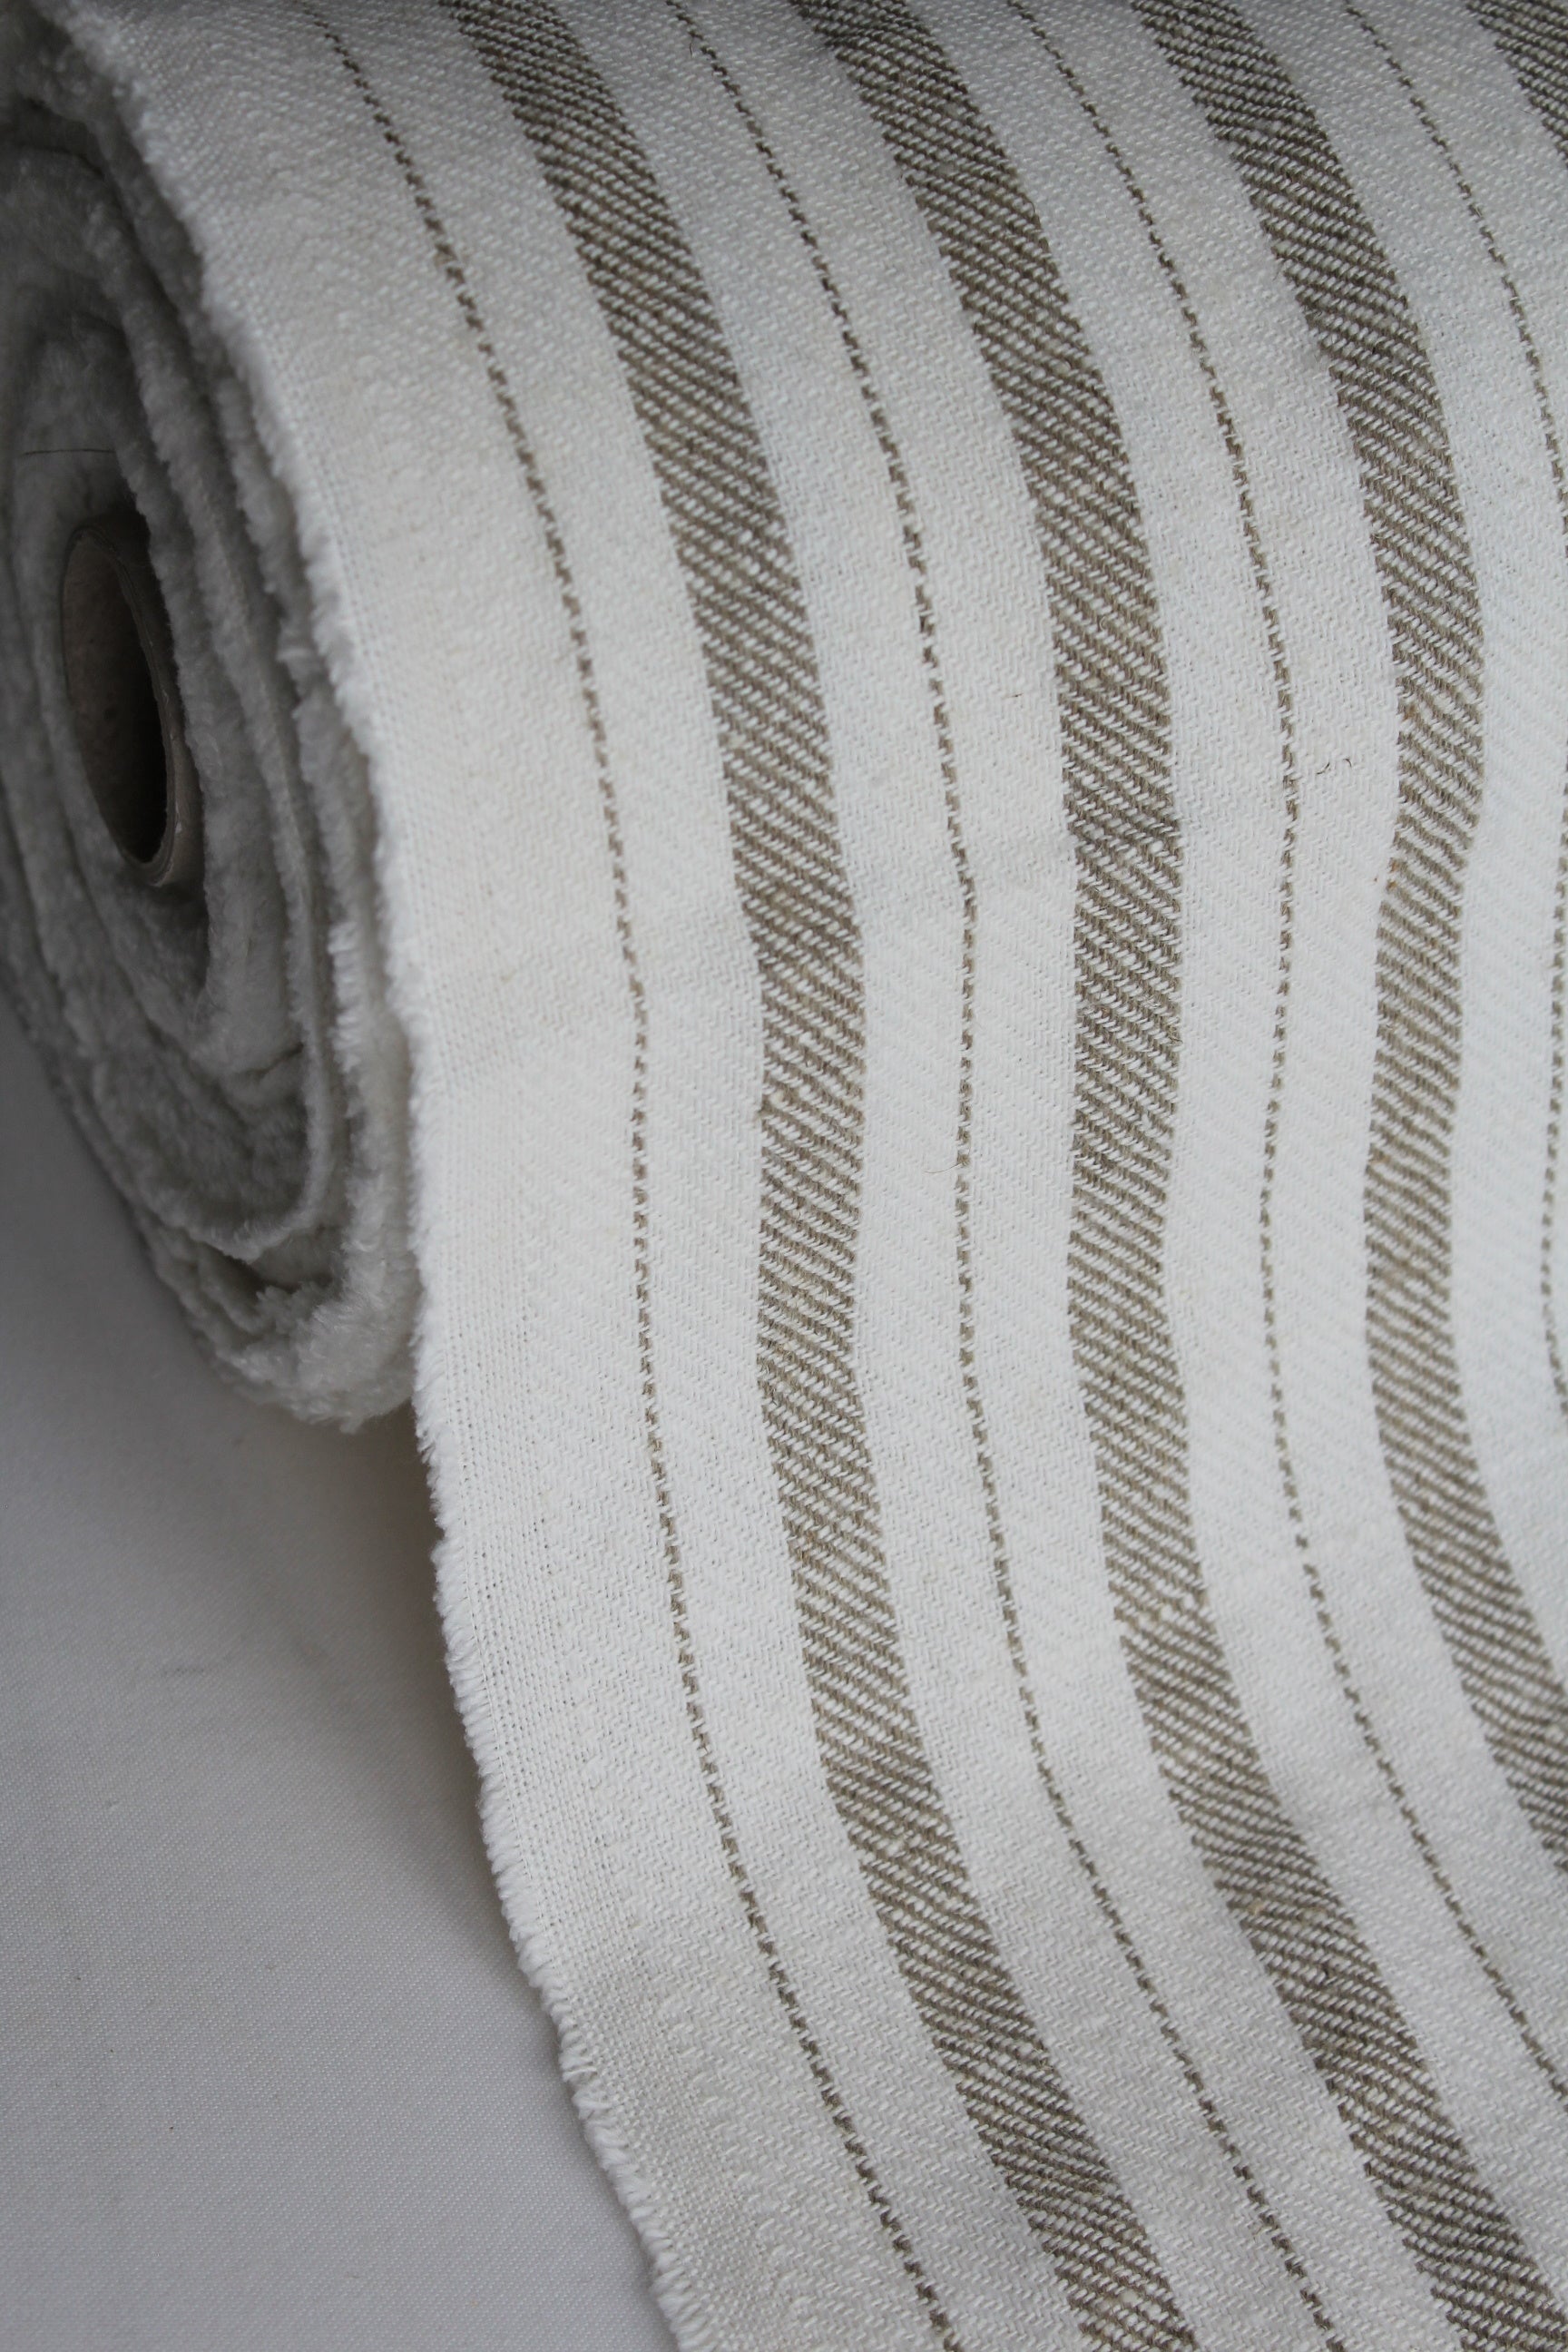 pure natural flax linen sand beige and white, natural rustic herringbone stripe texture, medium weight fabric